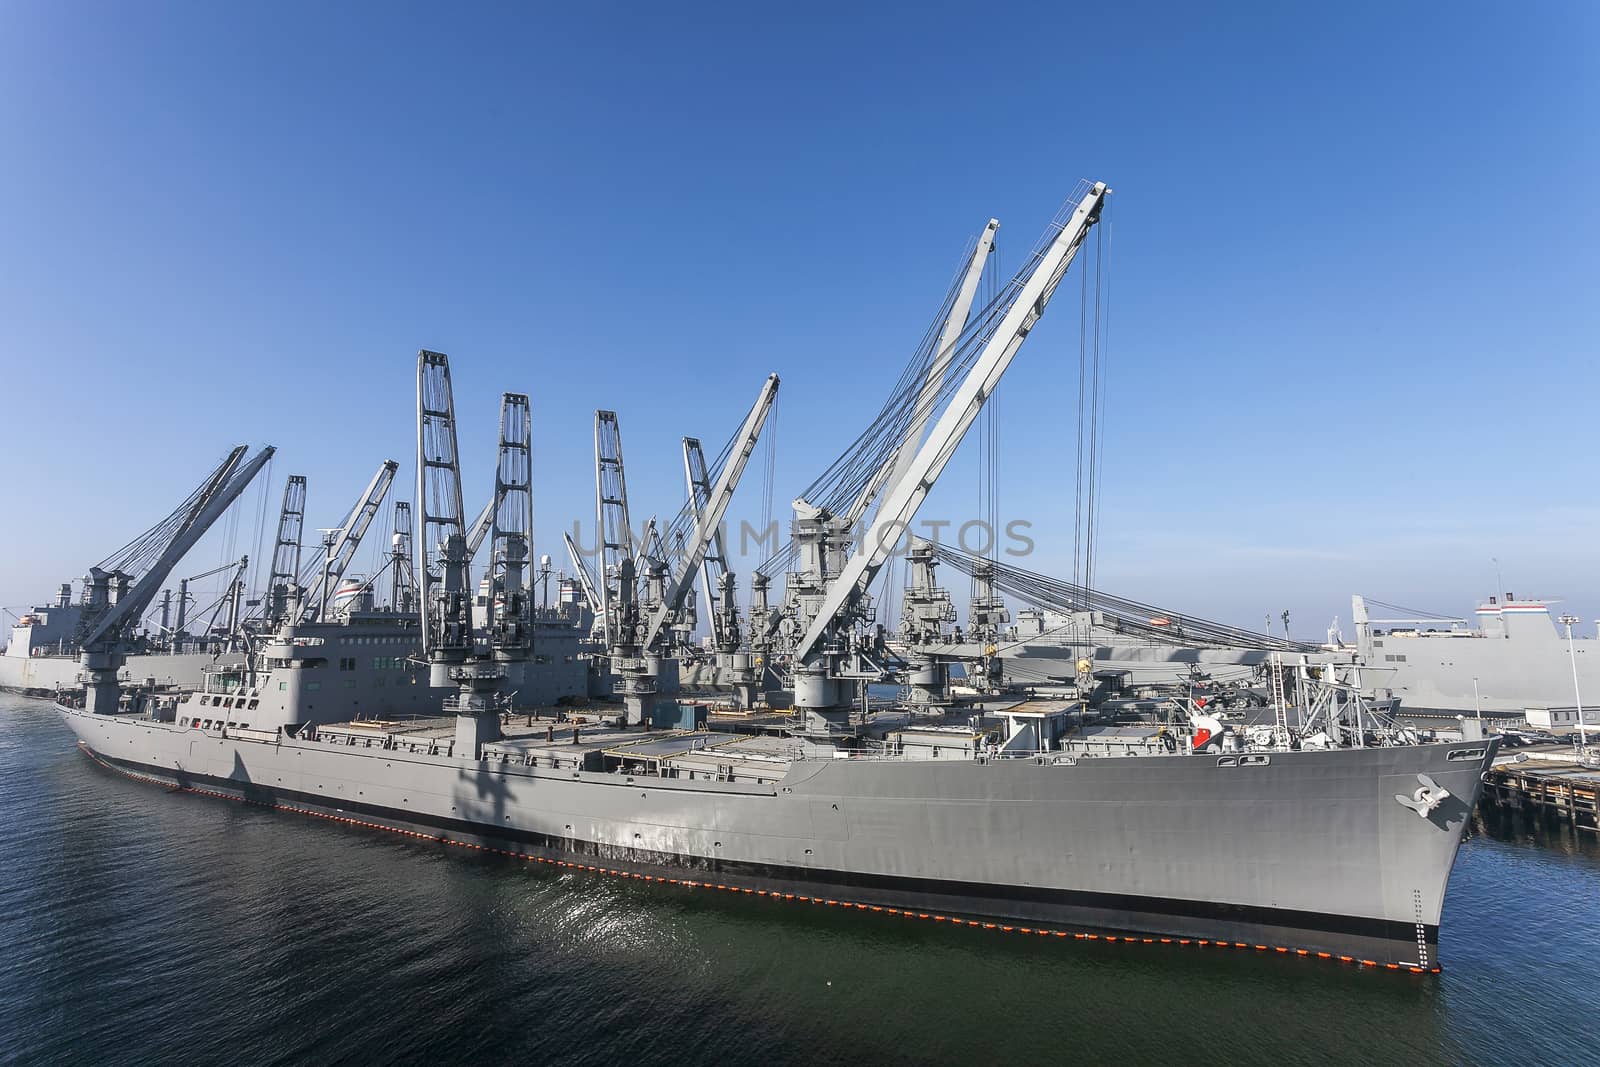 Navy Crane Ship by mmarfell